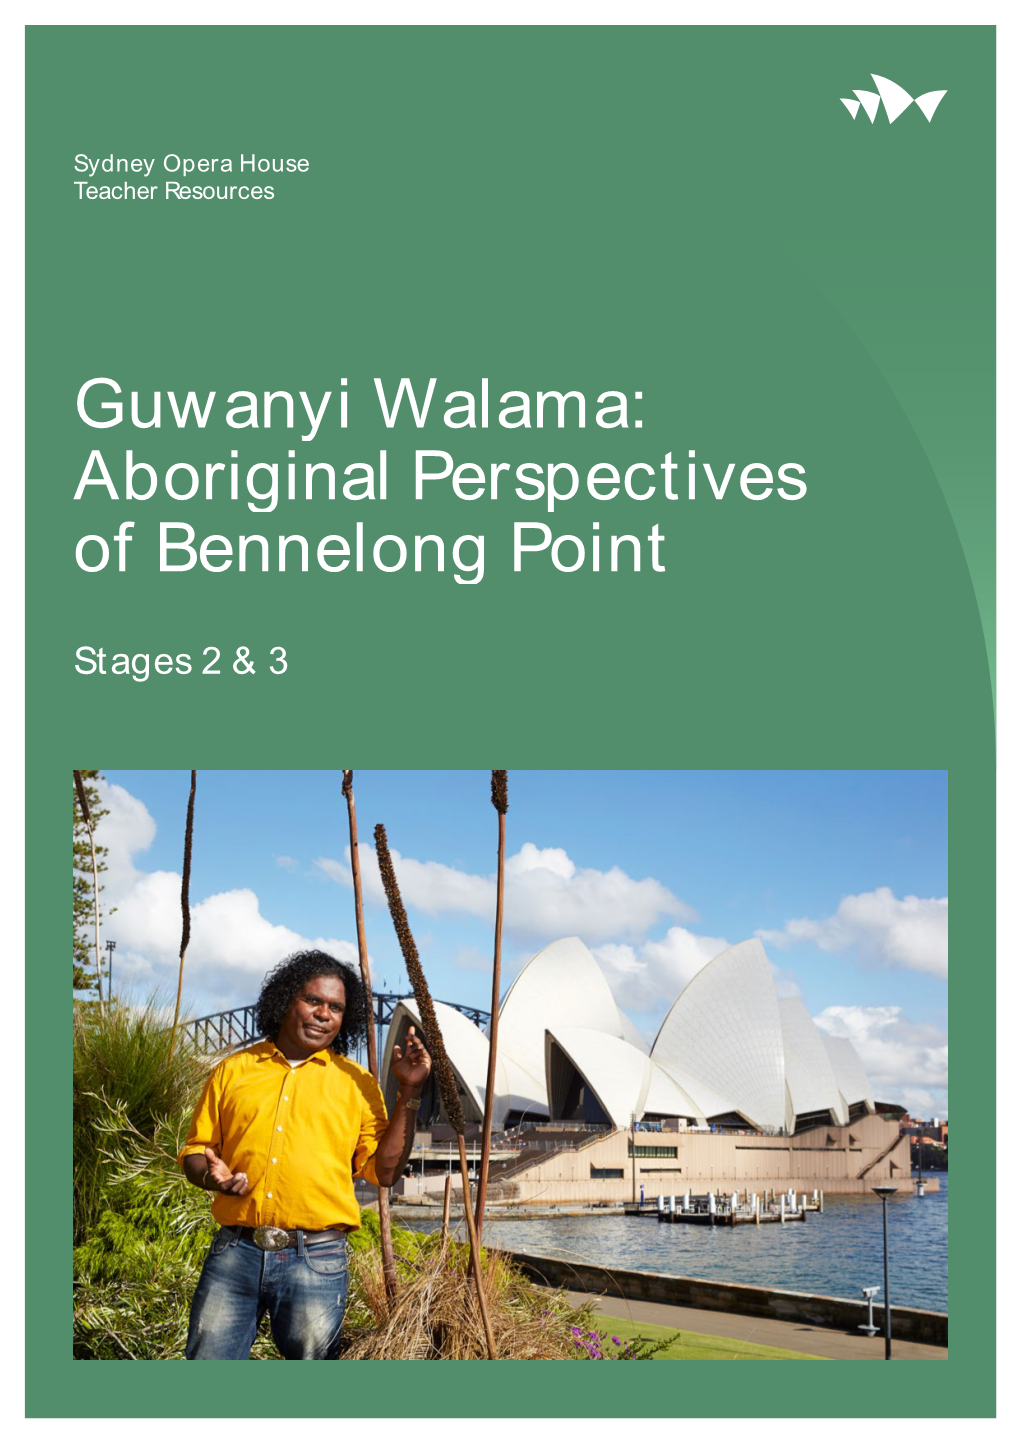 Guwanyi Walama: Aboriginal Perspectives of Bennelong Point